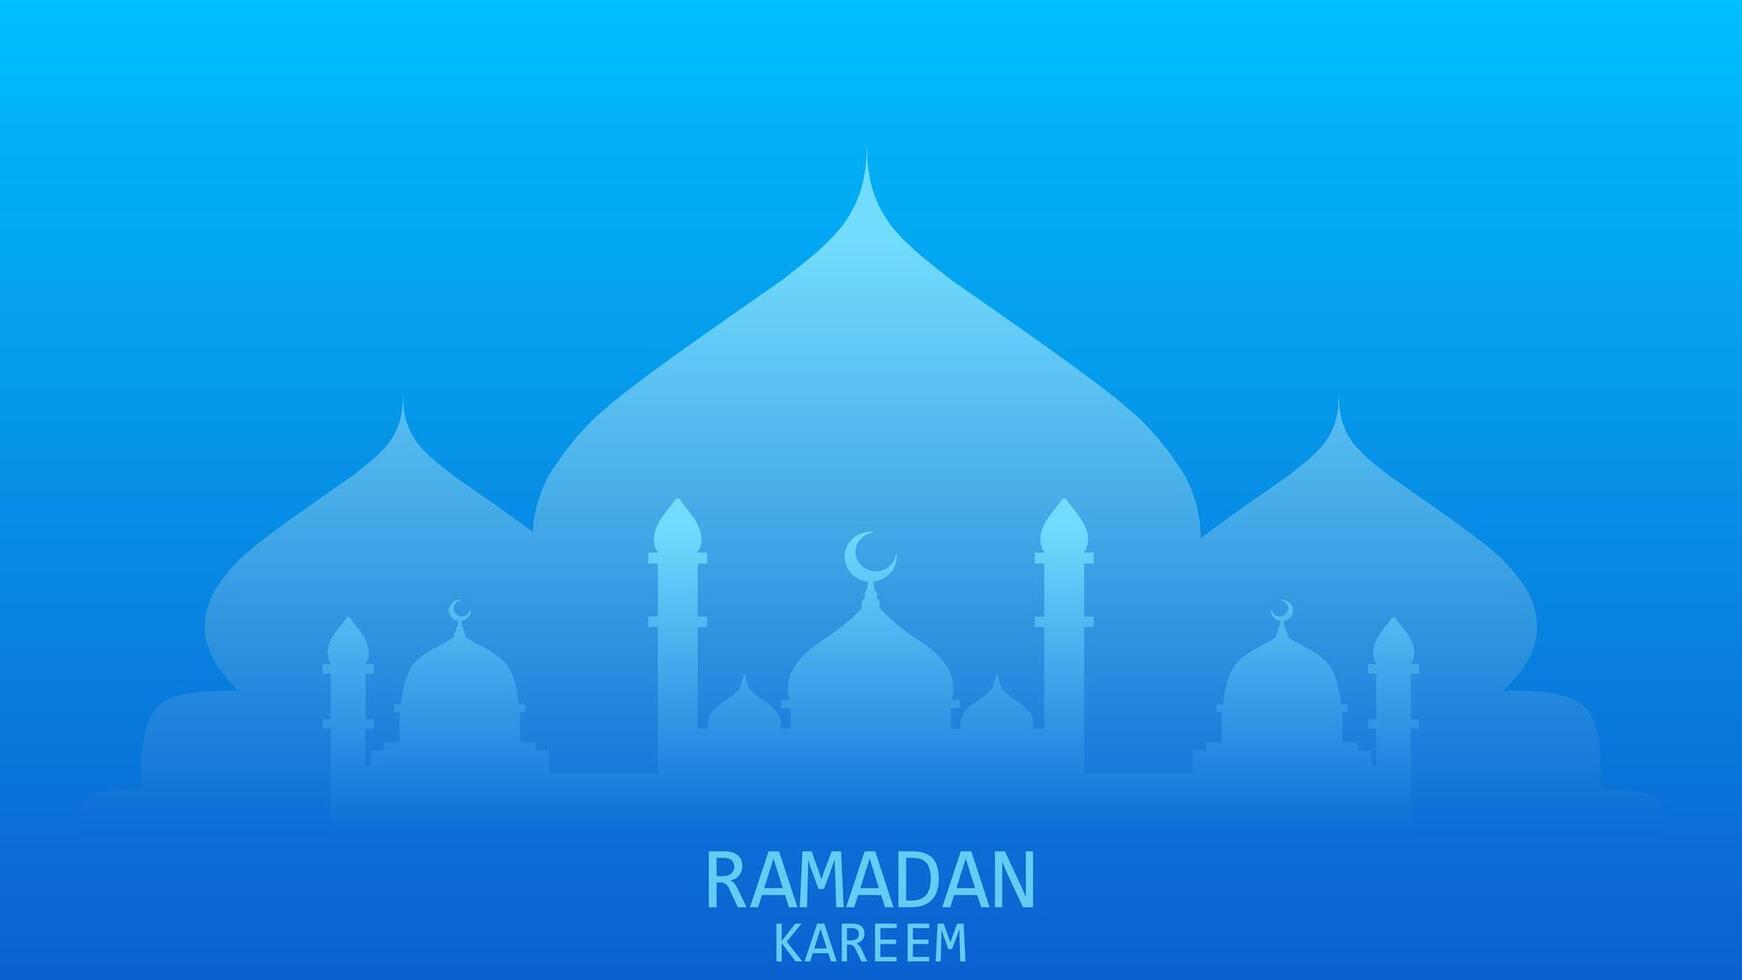 Ramadan un événement salutation vecteur Contexte. Islam salutation pour Ramadan fête ou islamique événement. islamique Contexte pour Ramadan, aïd, mubarak et musulman culture